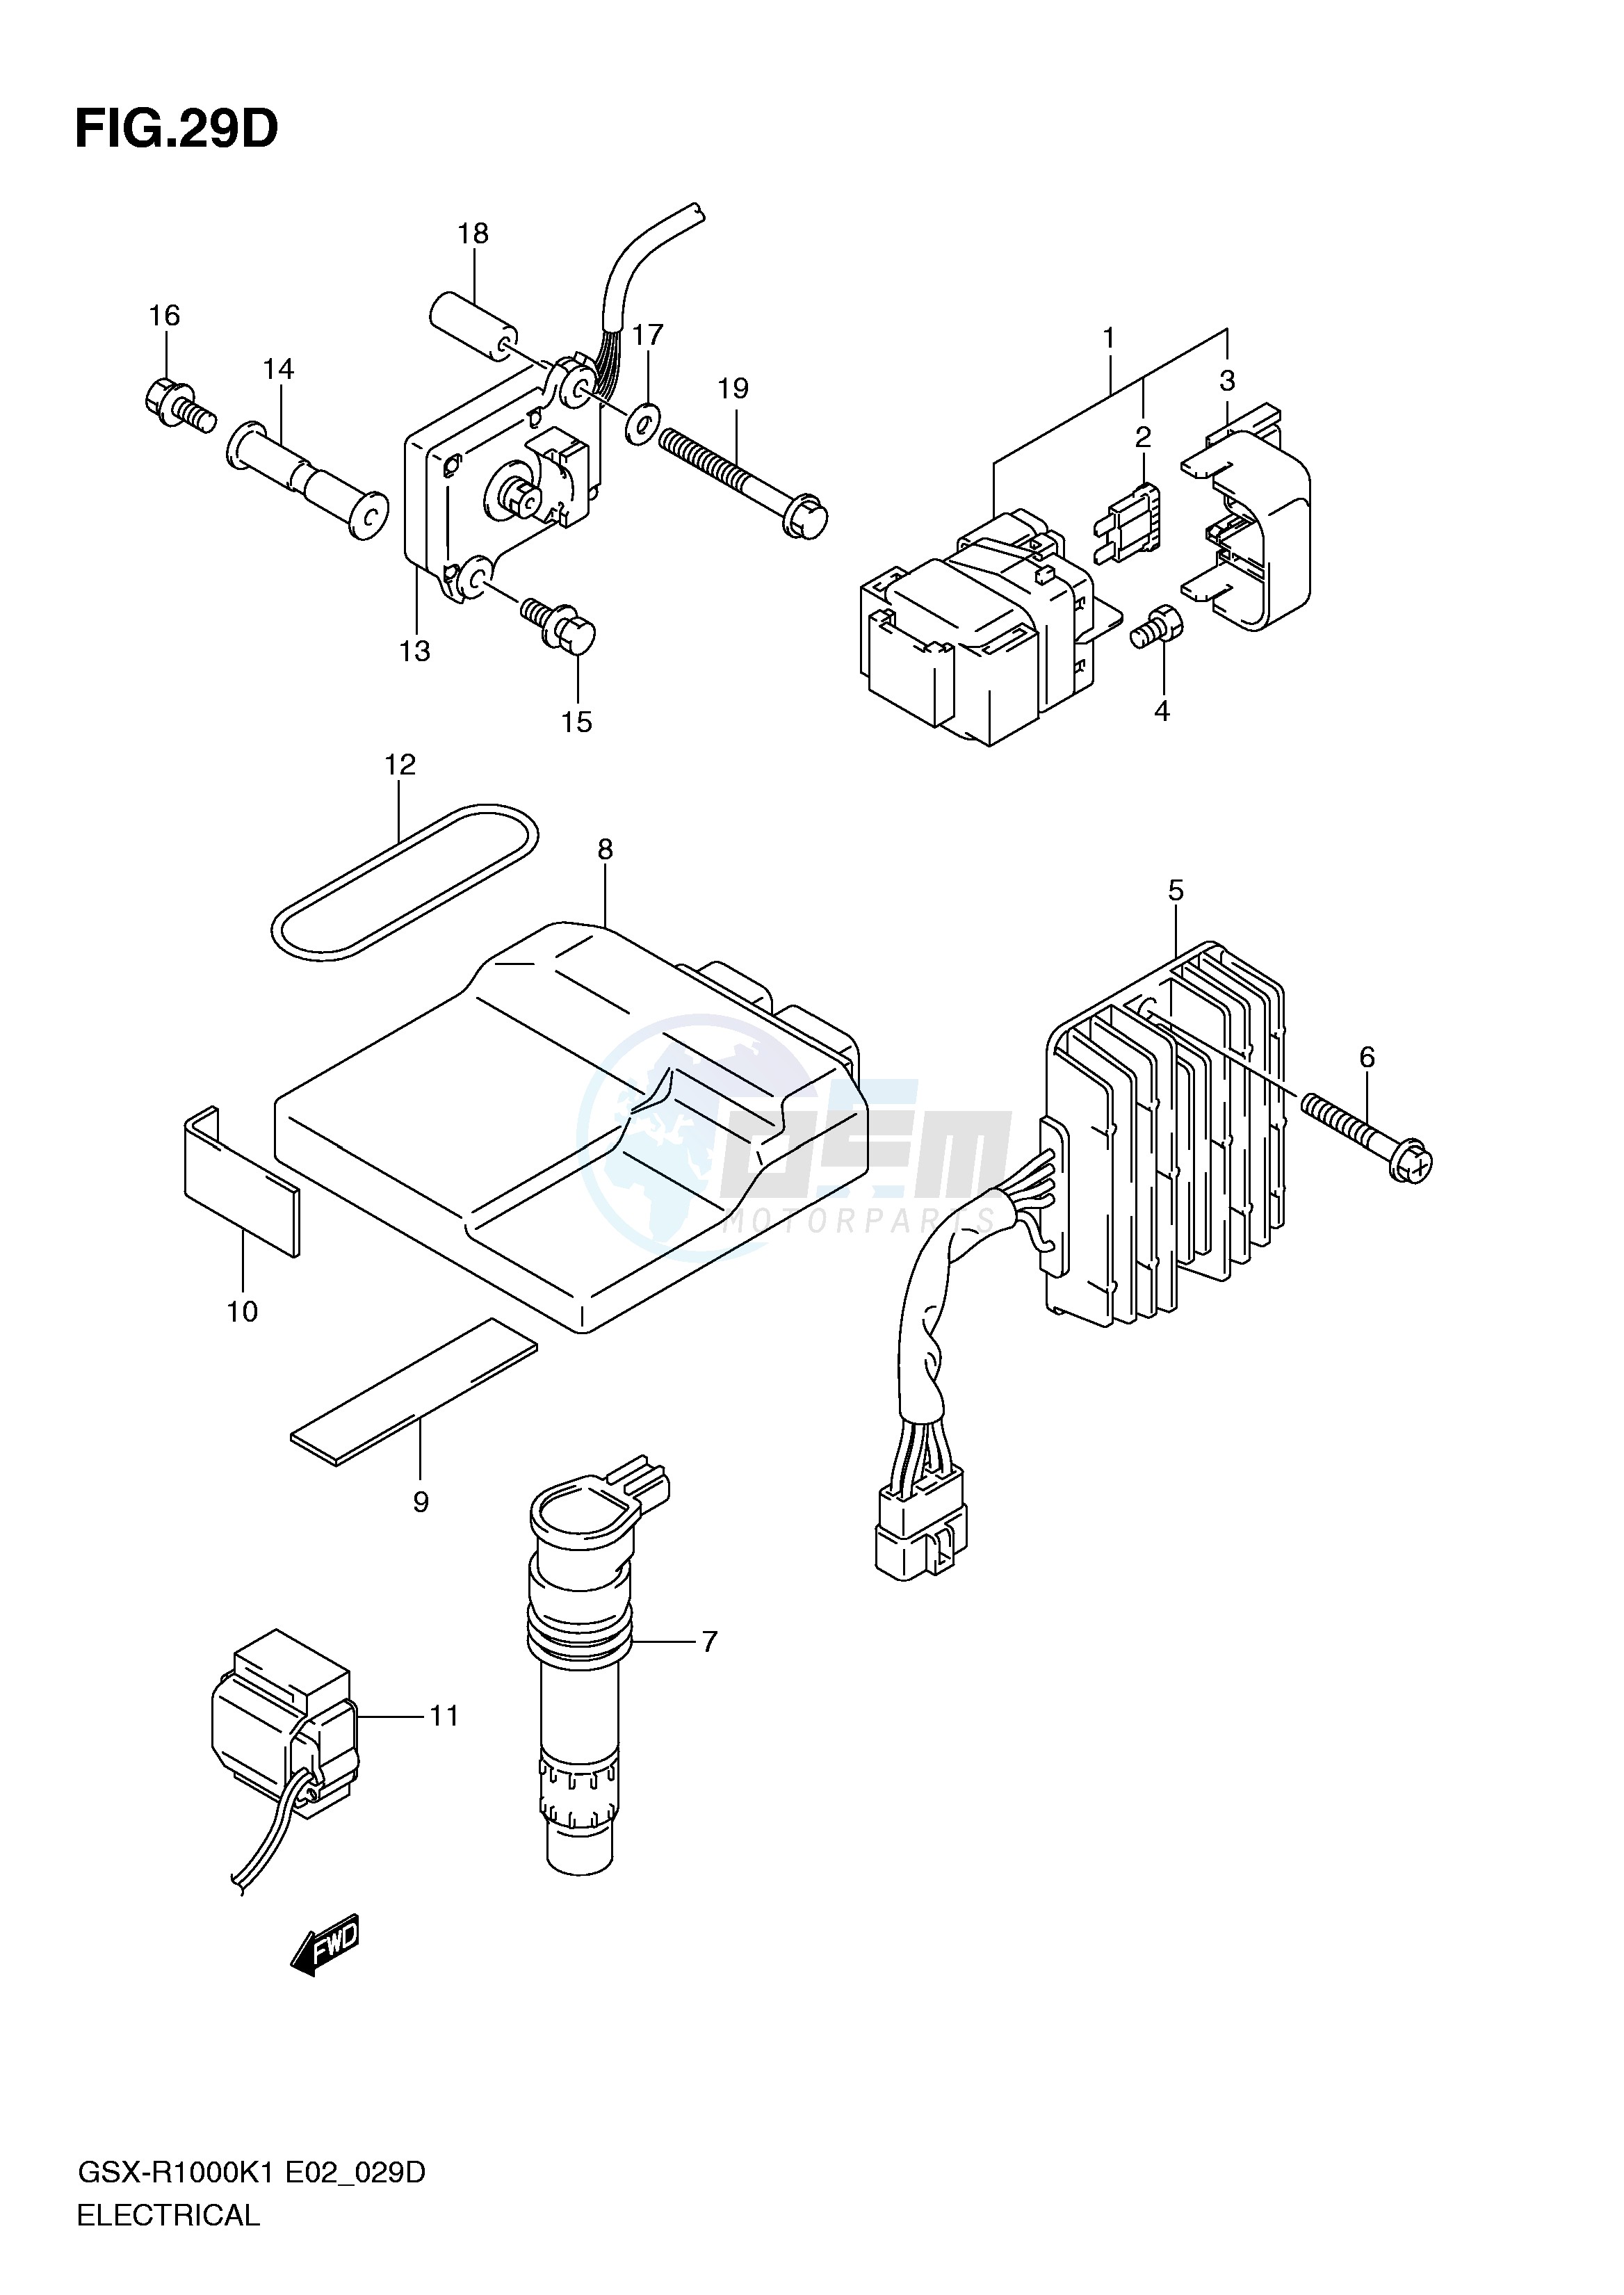 ELECTRICAL (GSX-R1000K2 E2) blueprint